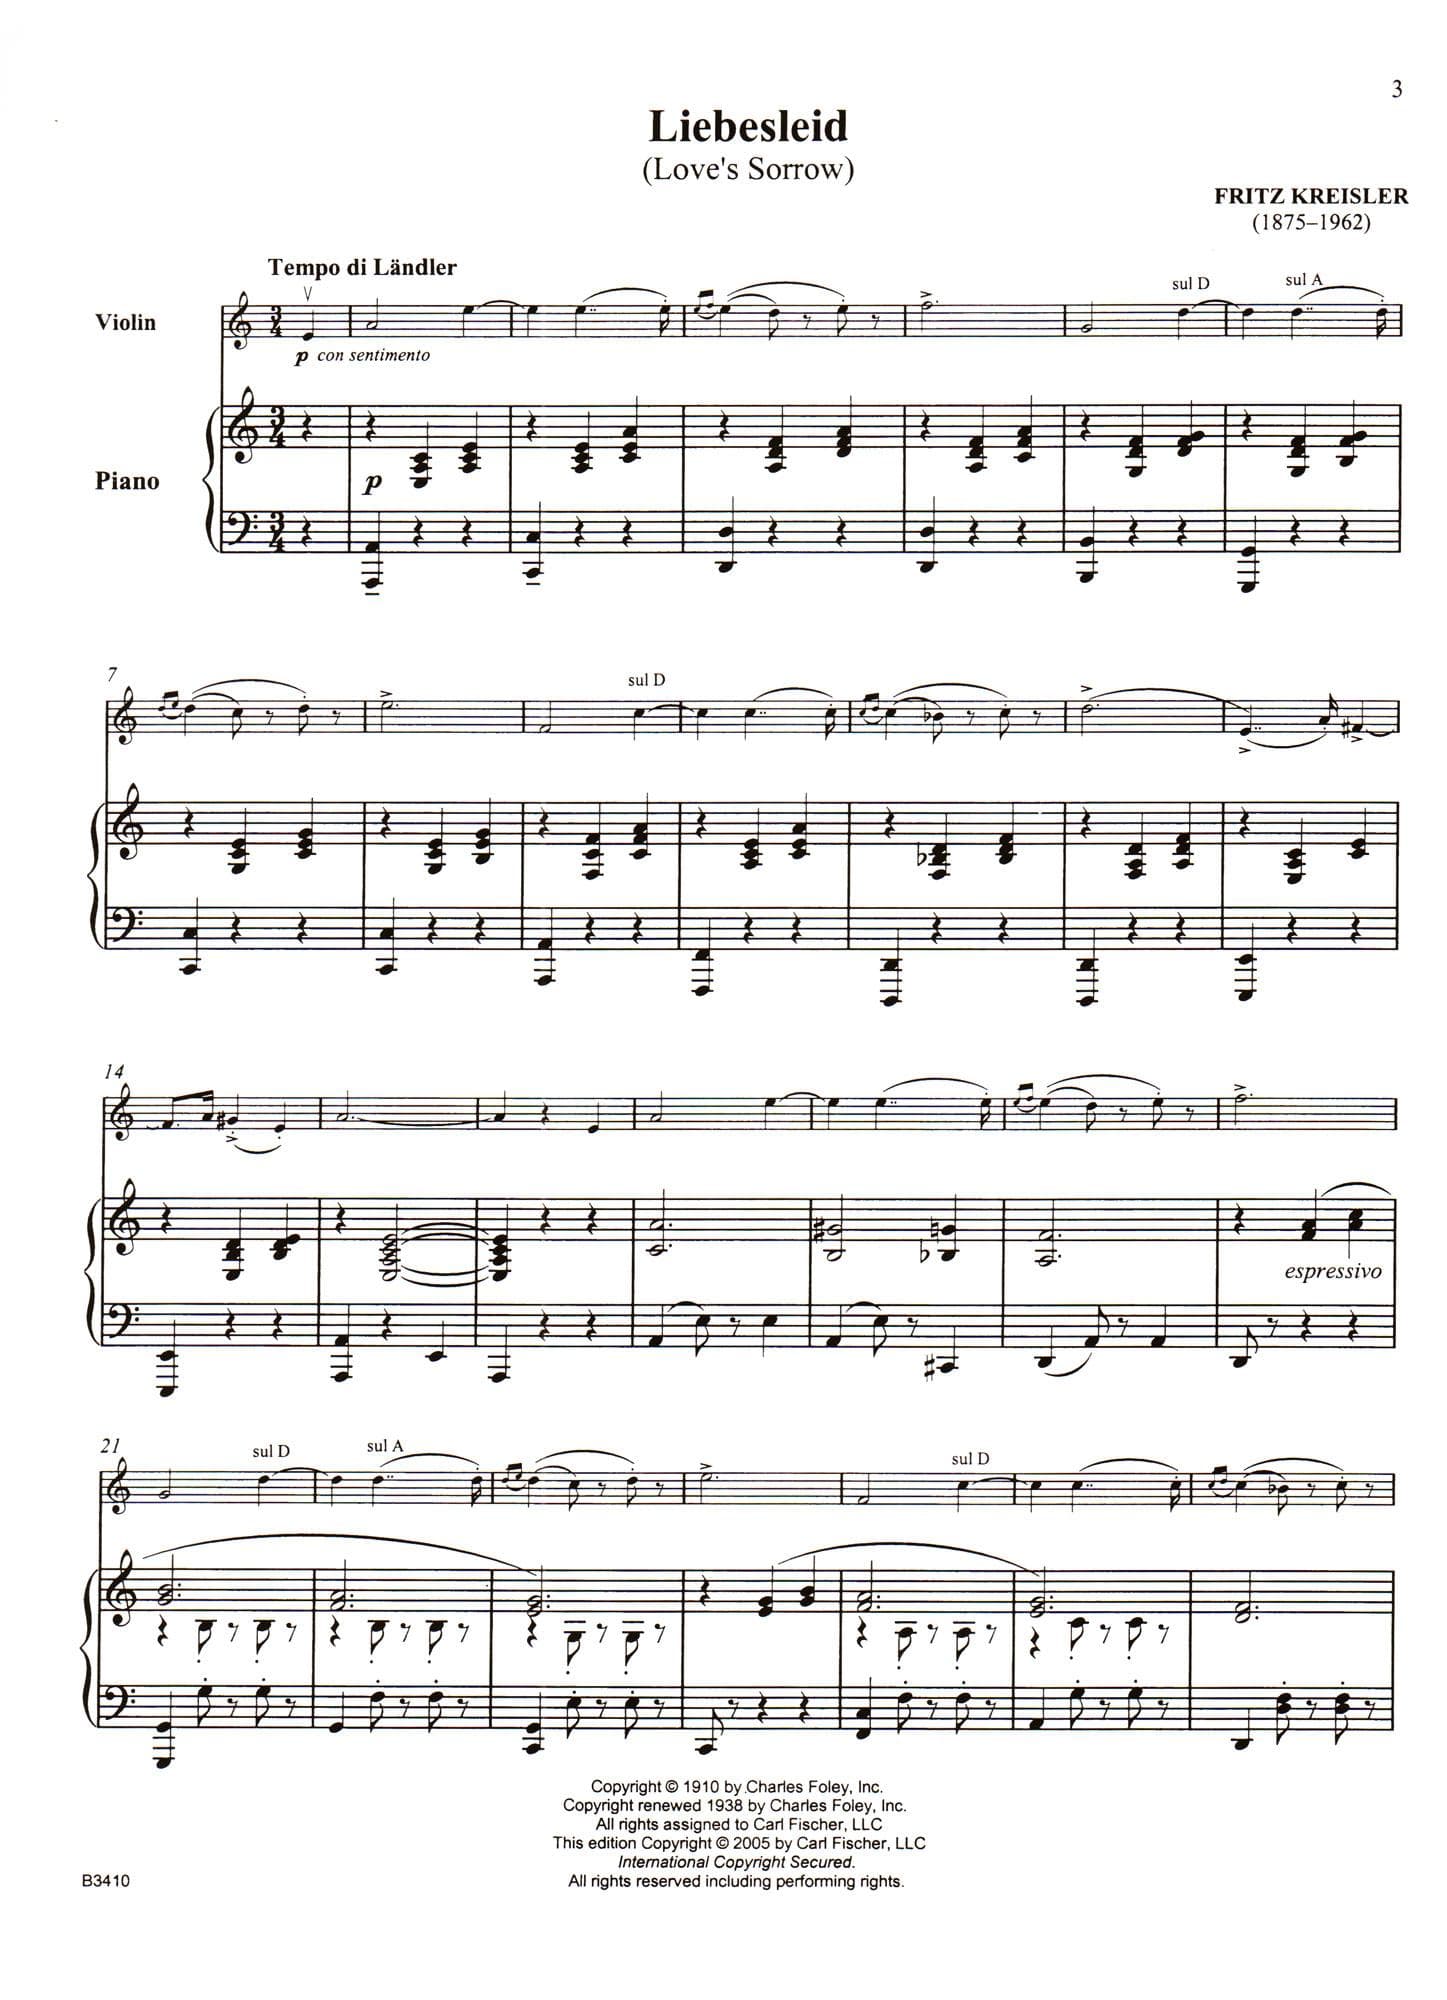 Kreisler, Fritz - Liebesleid - for Violin and Piano - includes Online Audio - Carl Fischer Edition